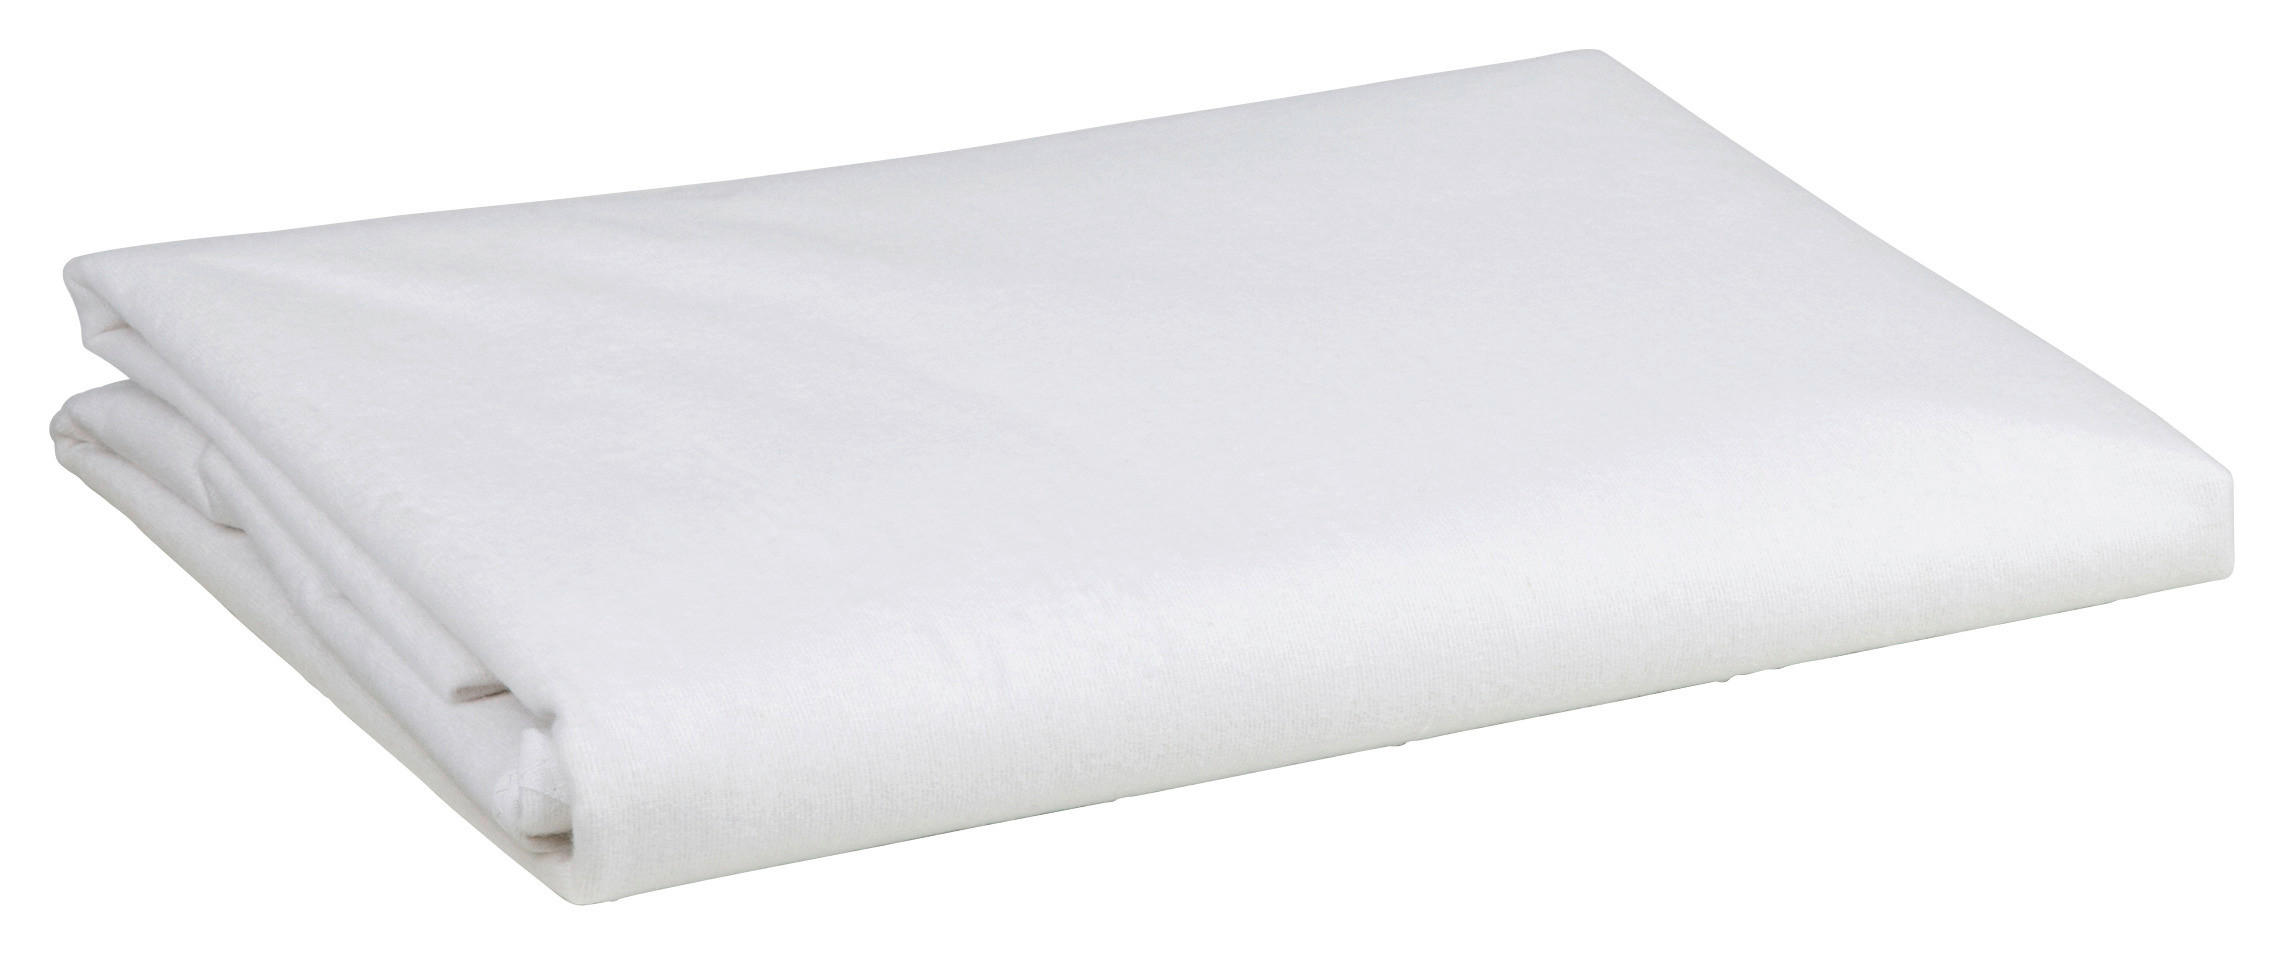 OCHRANNÝ POVLAK NA MATRACI, 90/200 cm - bílá, Basics, textil (90/200cm) - Sleeptex